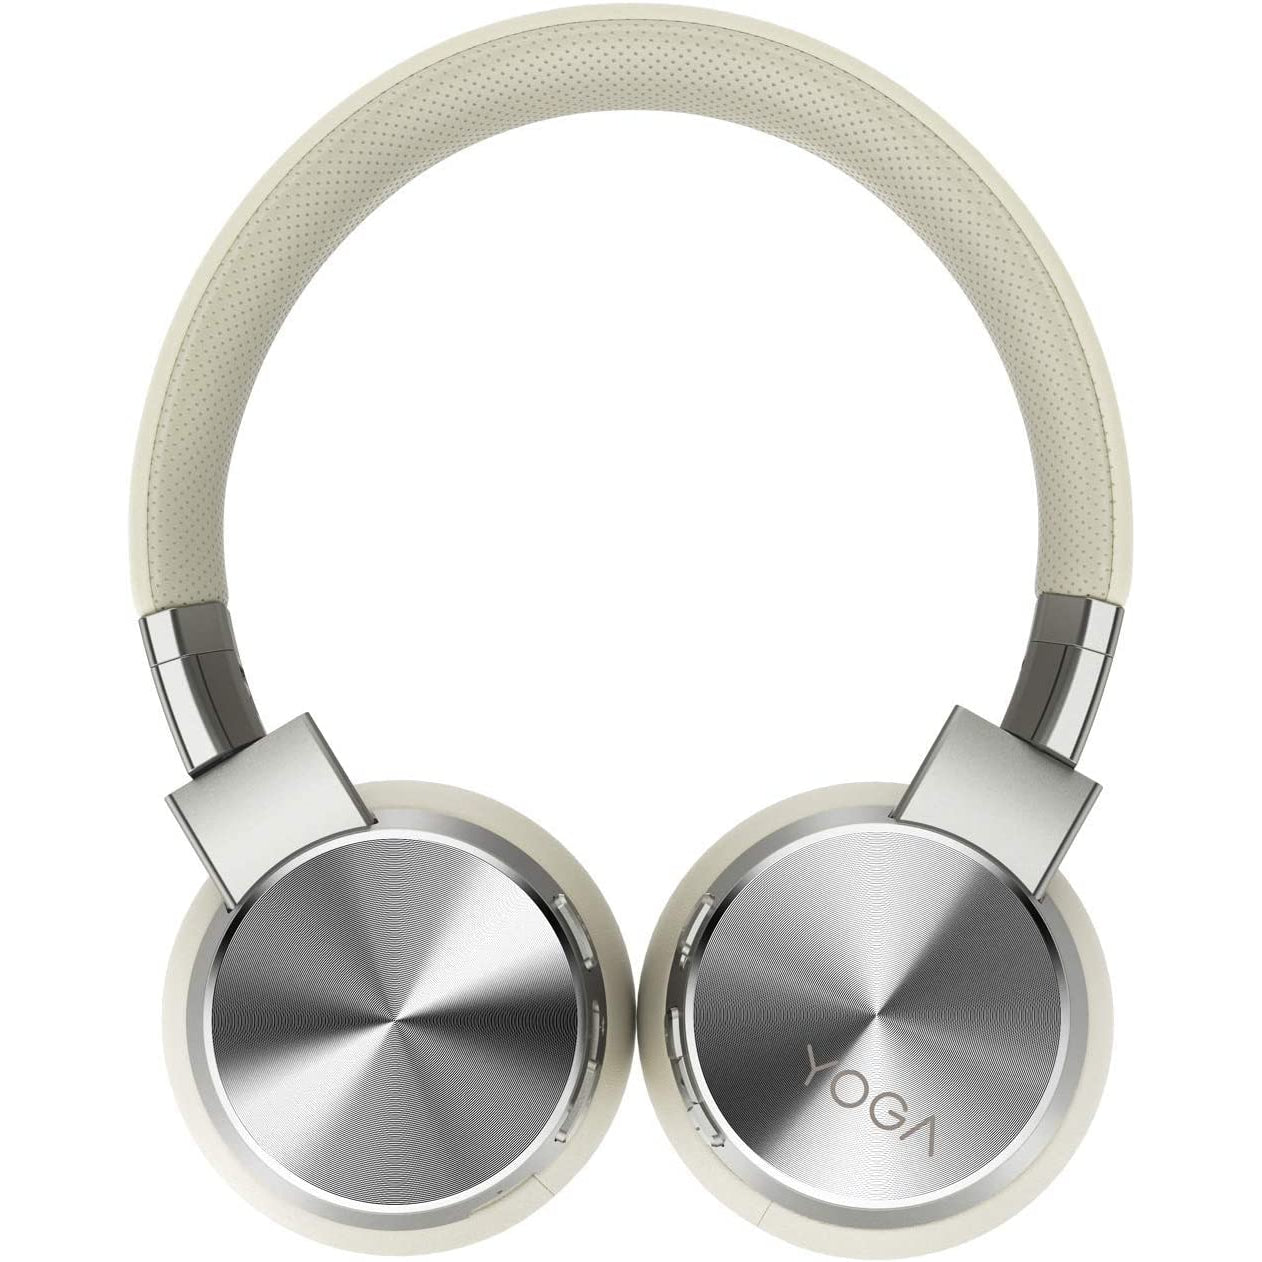 Lenovo Yoga Active Noise Cancellation Headphones - Refurbished Excellent